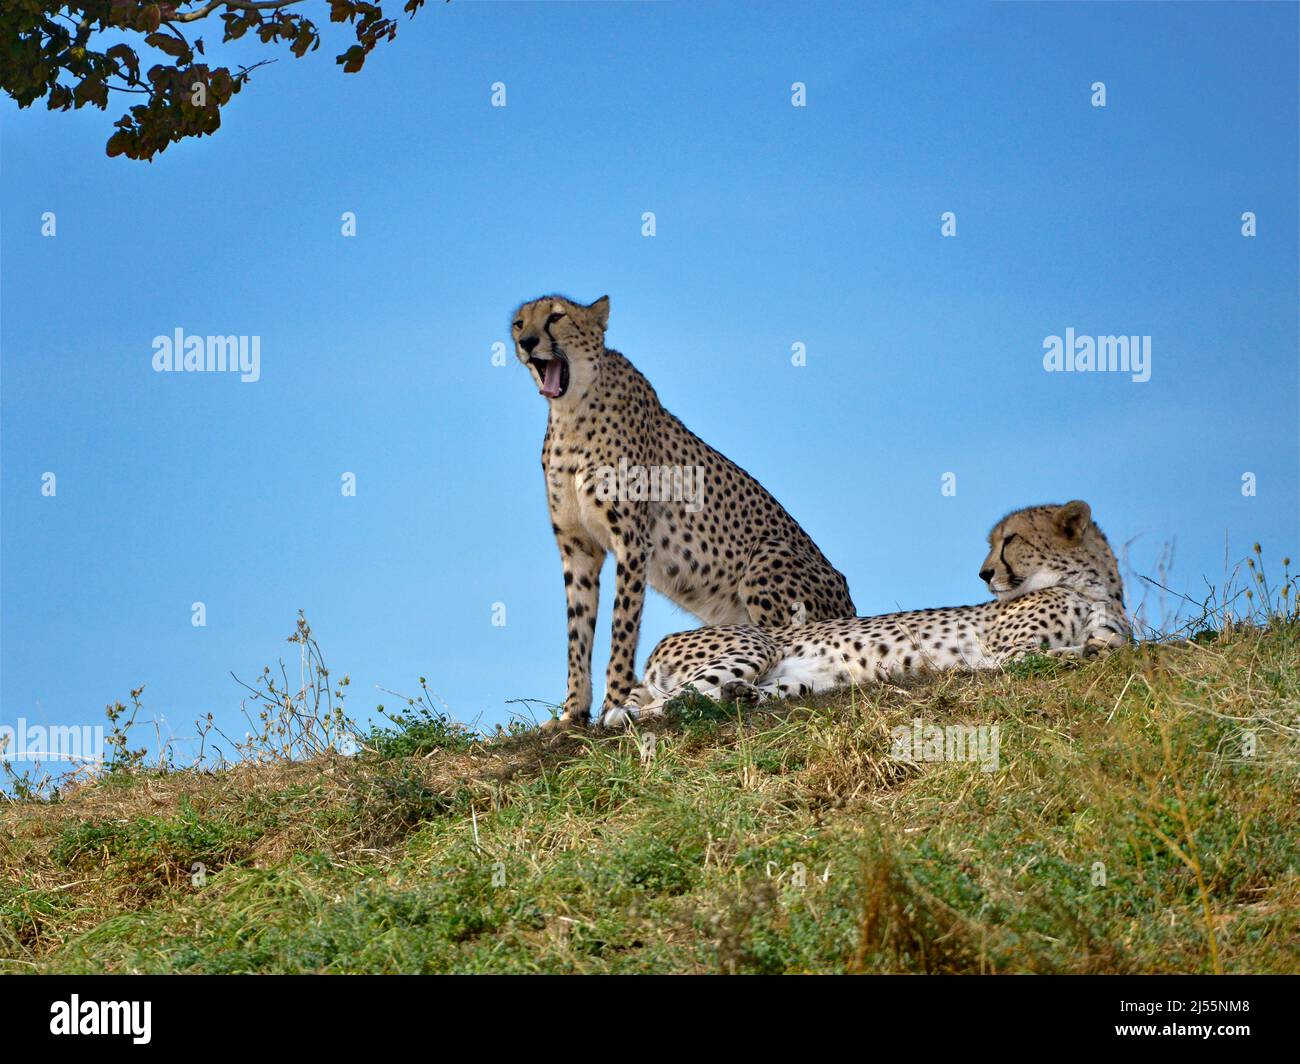 Closeup African Cheetahs (Acinonyx jubatus) on grass on the blue sky background Stock Photo